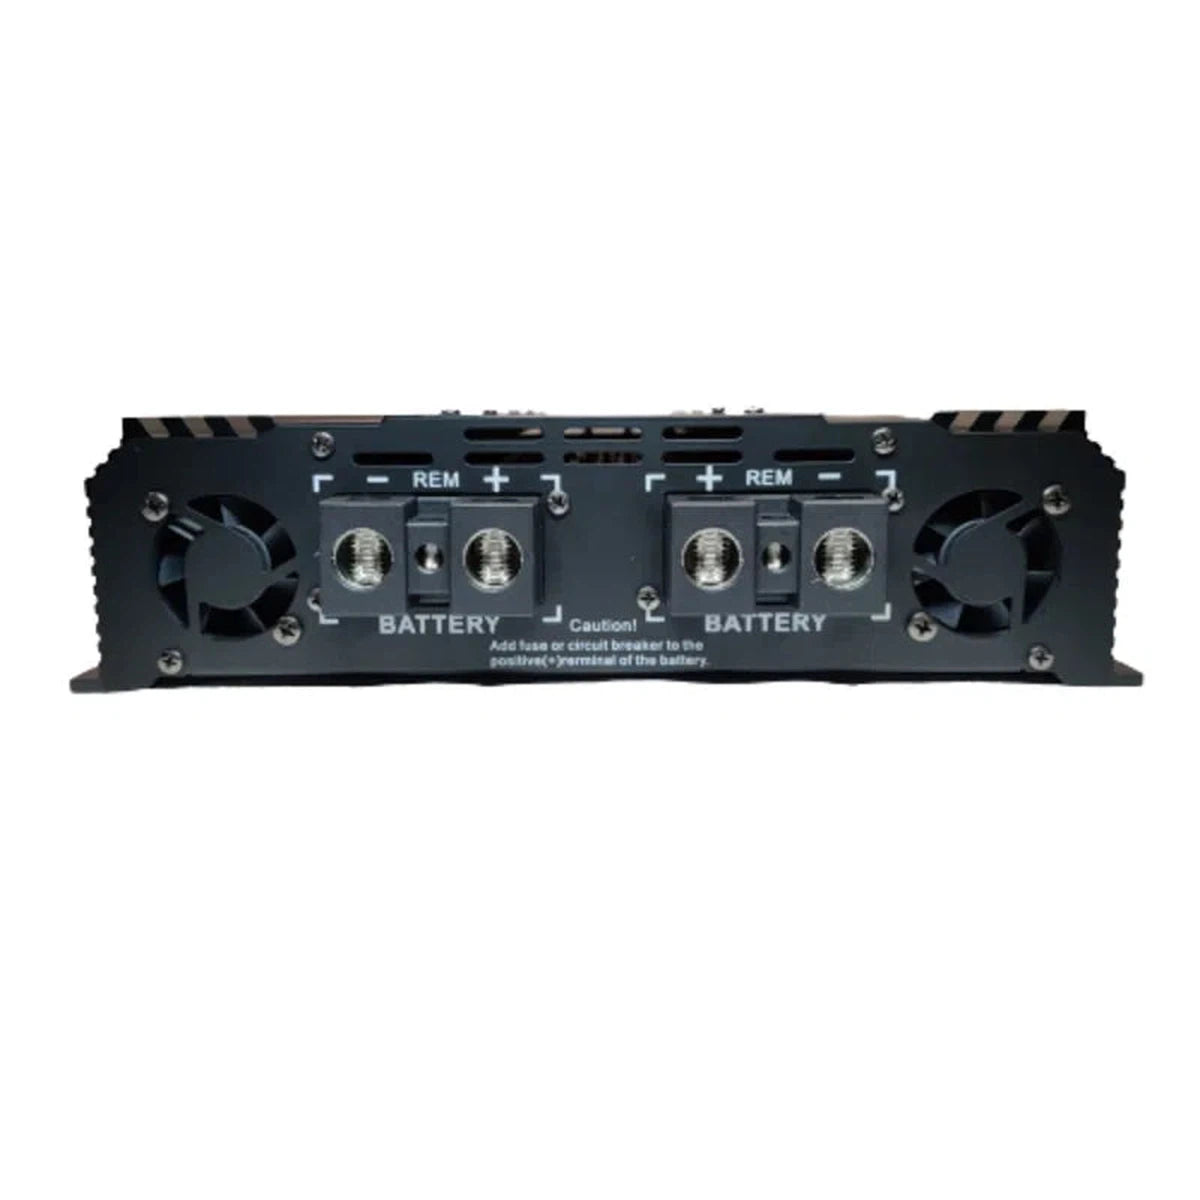 GS Audio-Limit Line GS-11700.1-1-Kanal Verstärker-Masori.de